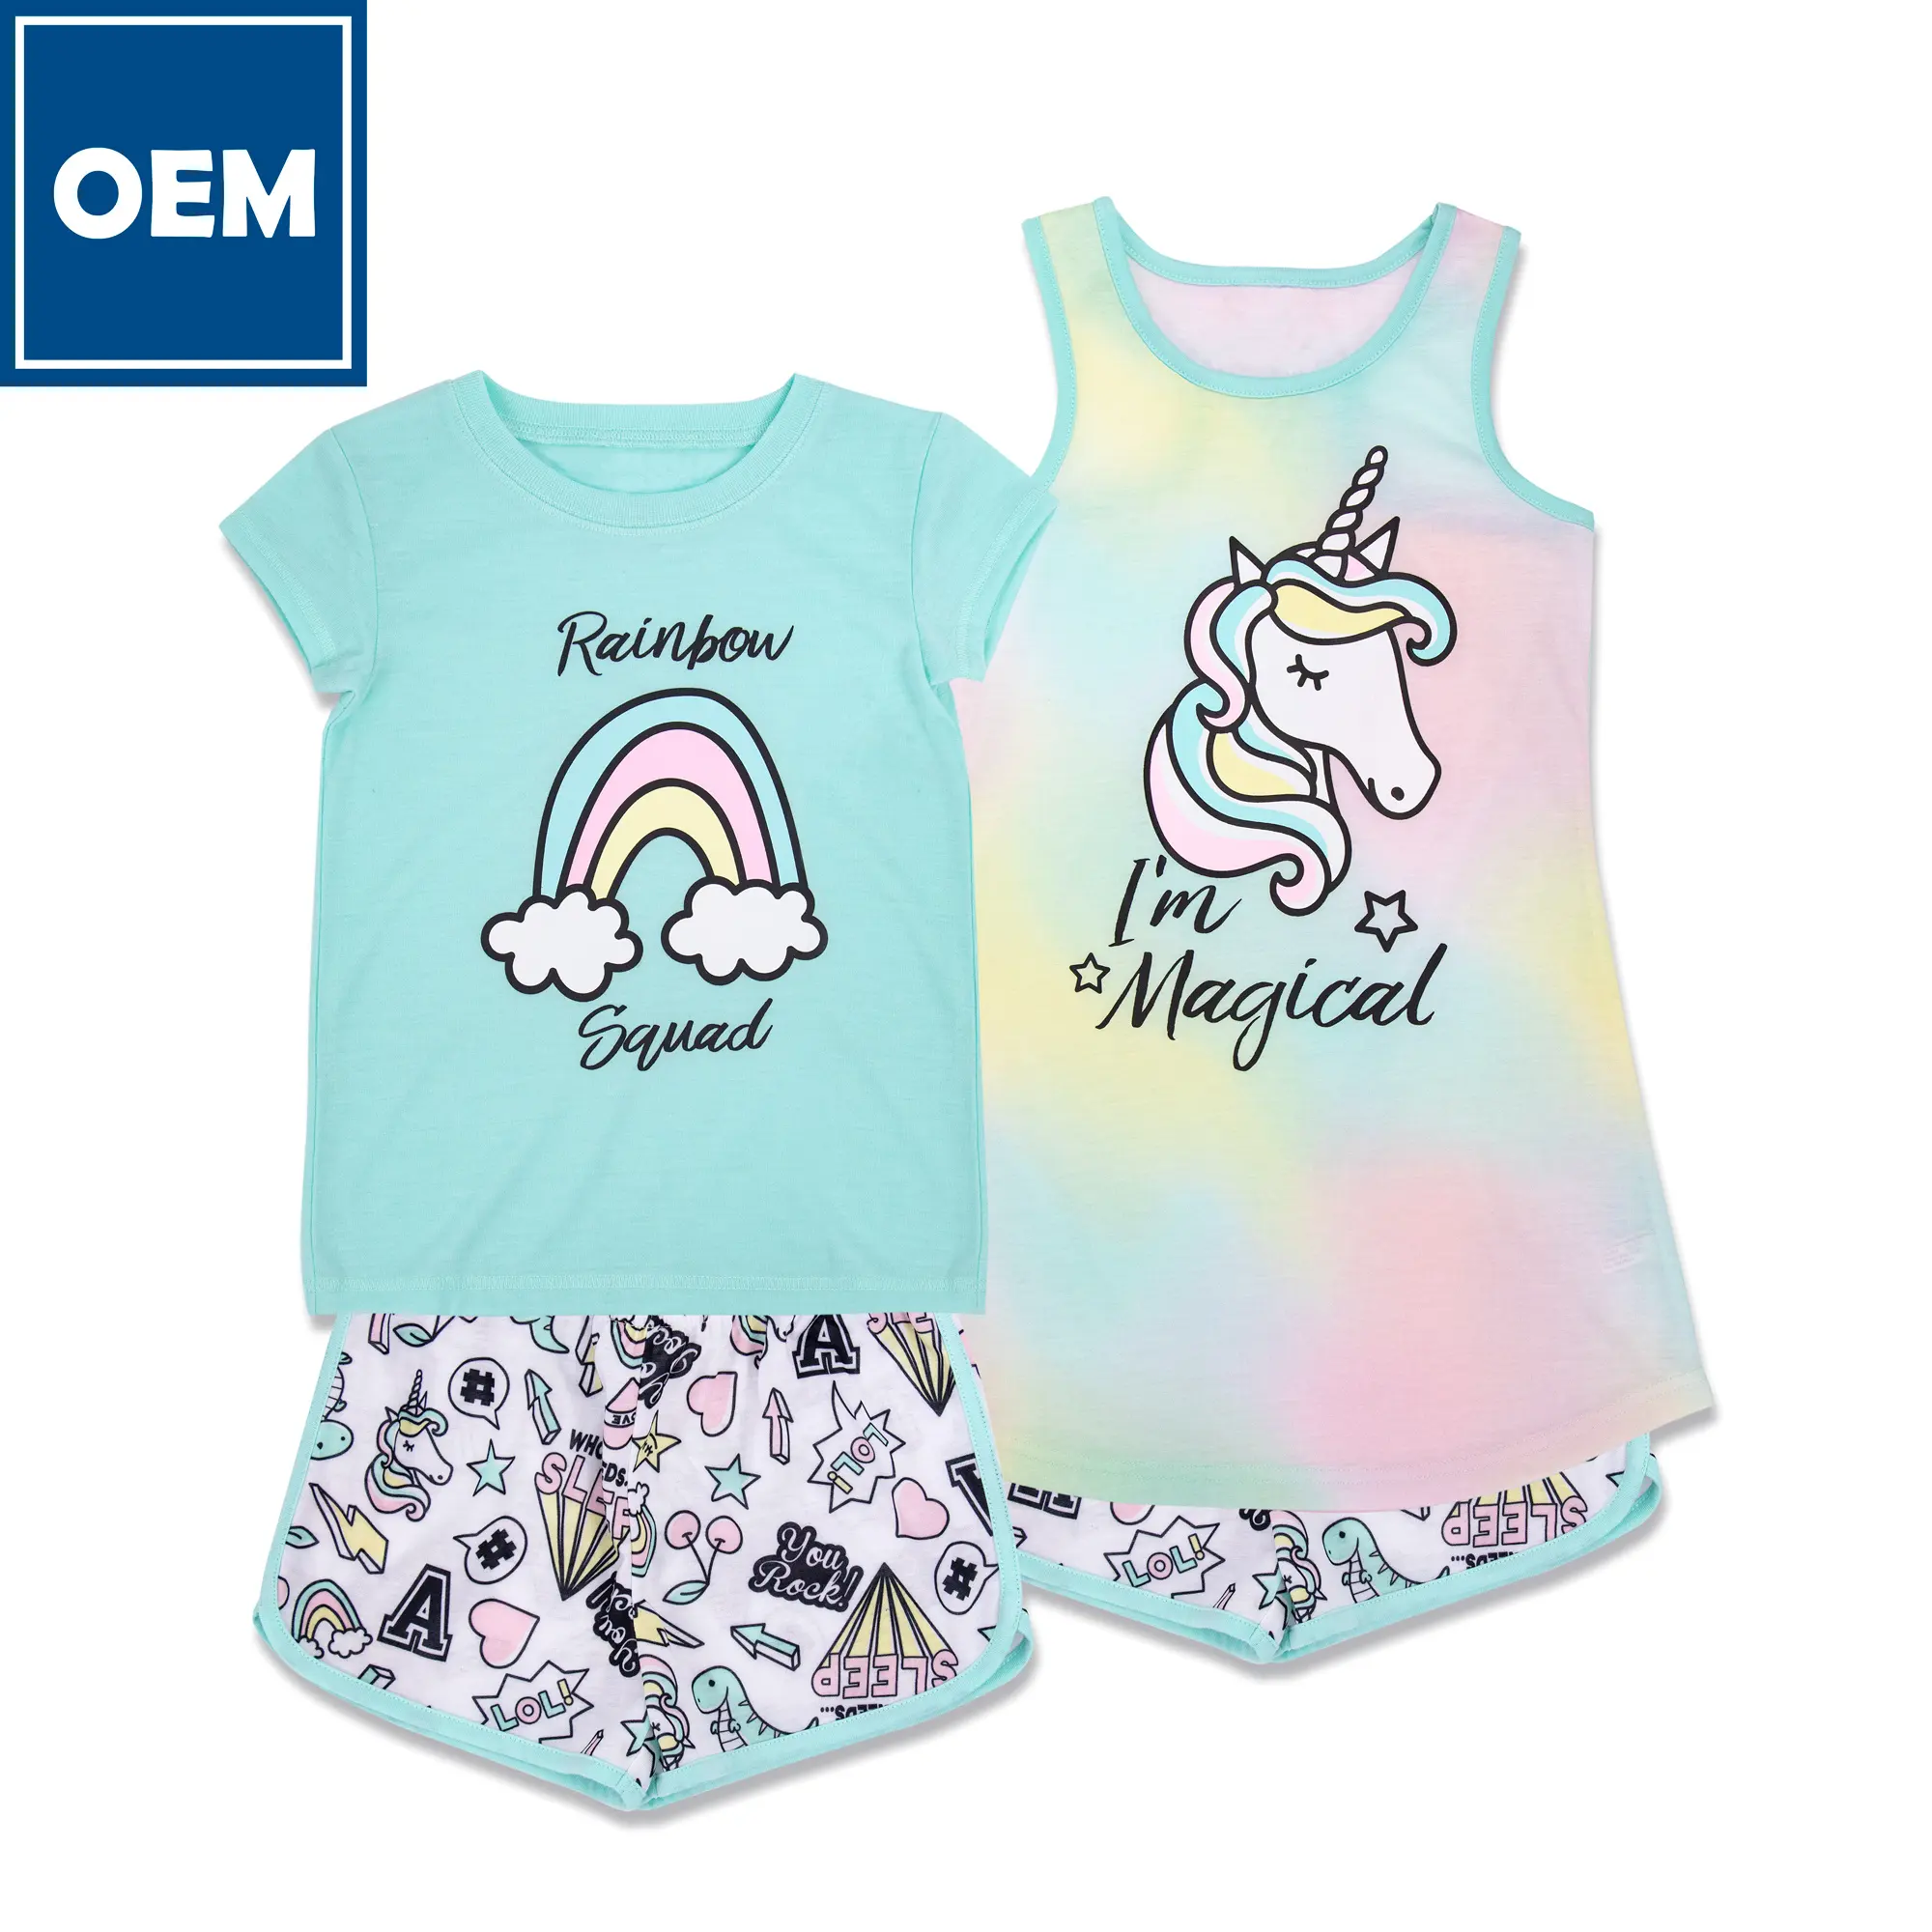 OEM clothing Tee sleeveless tops dolphin shorts for kids girls